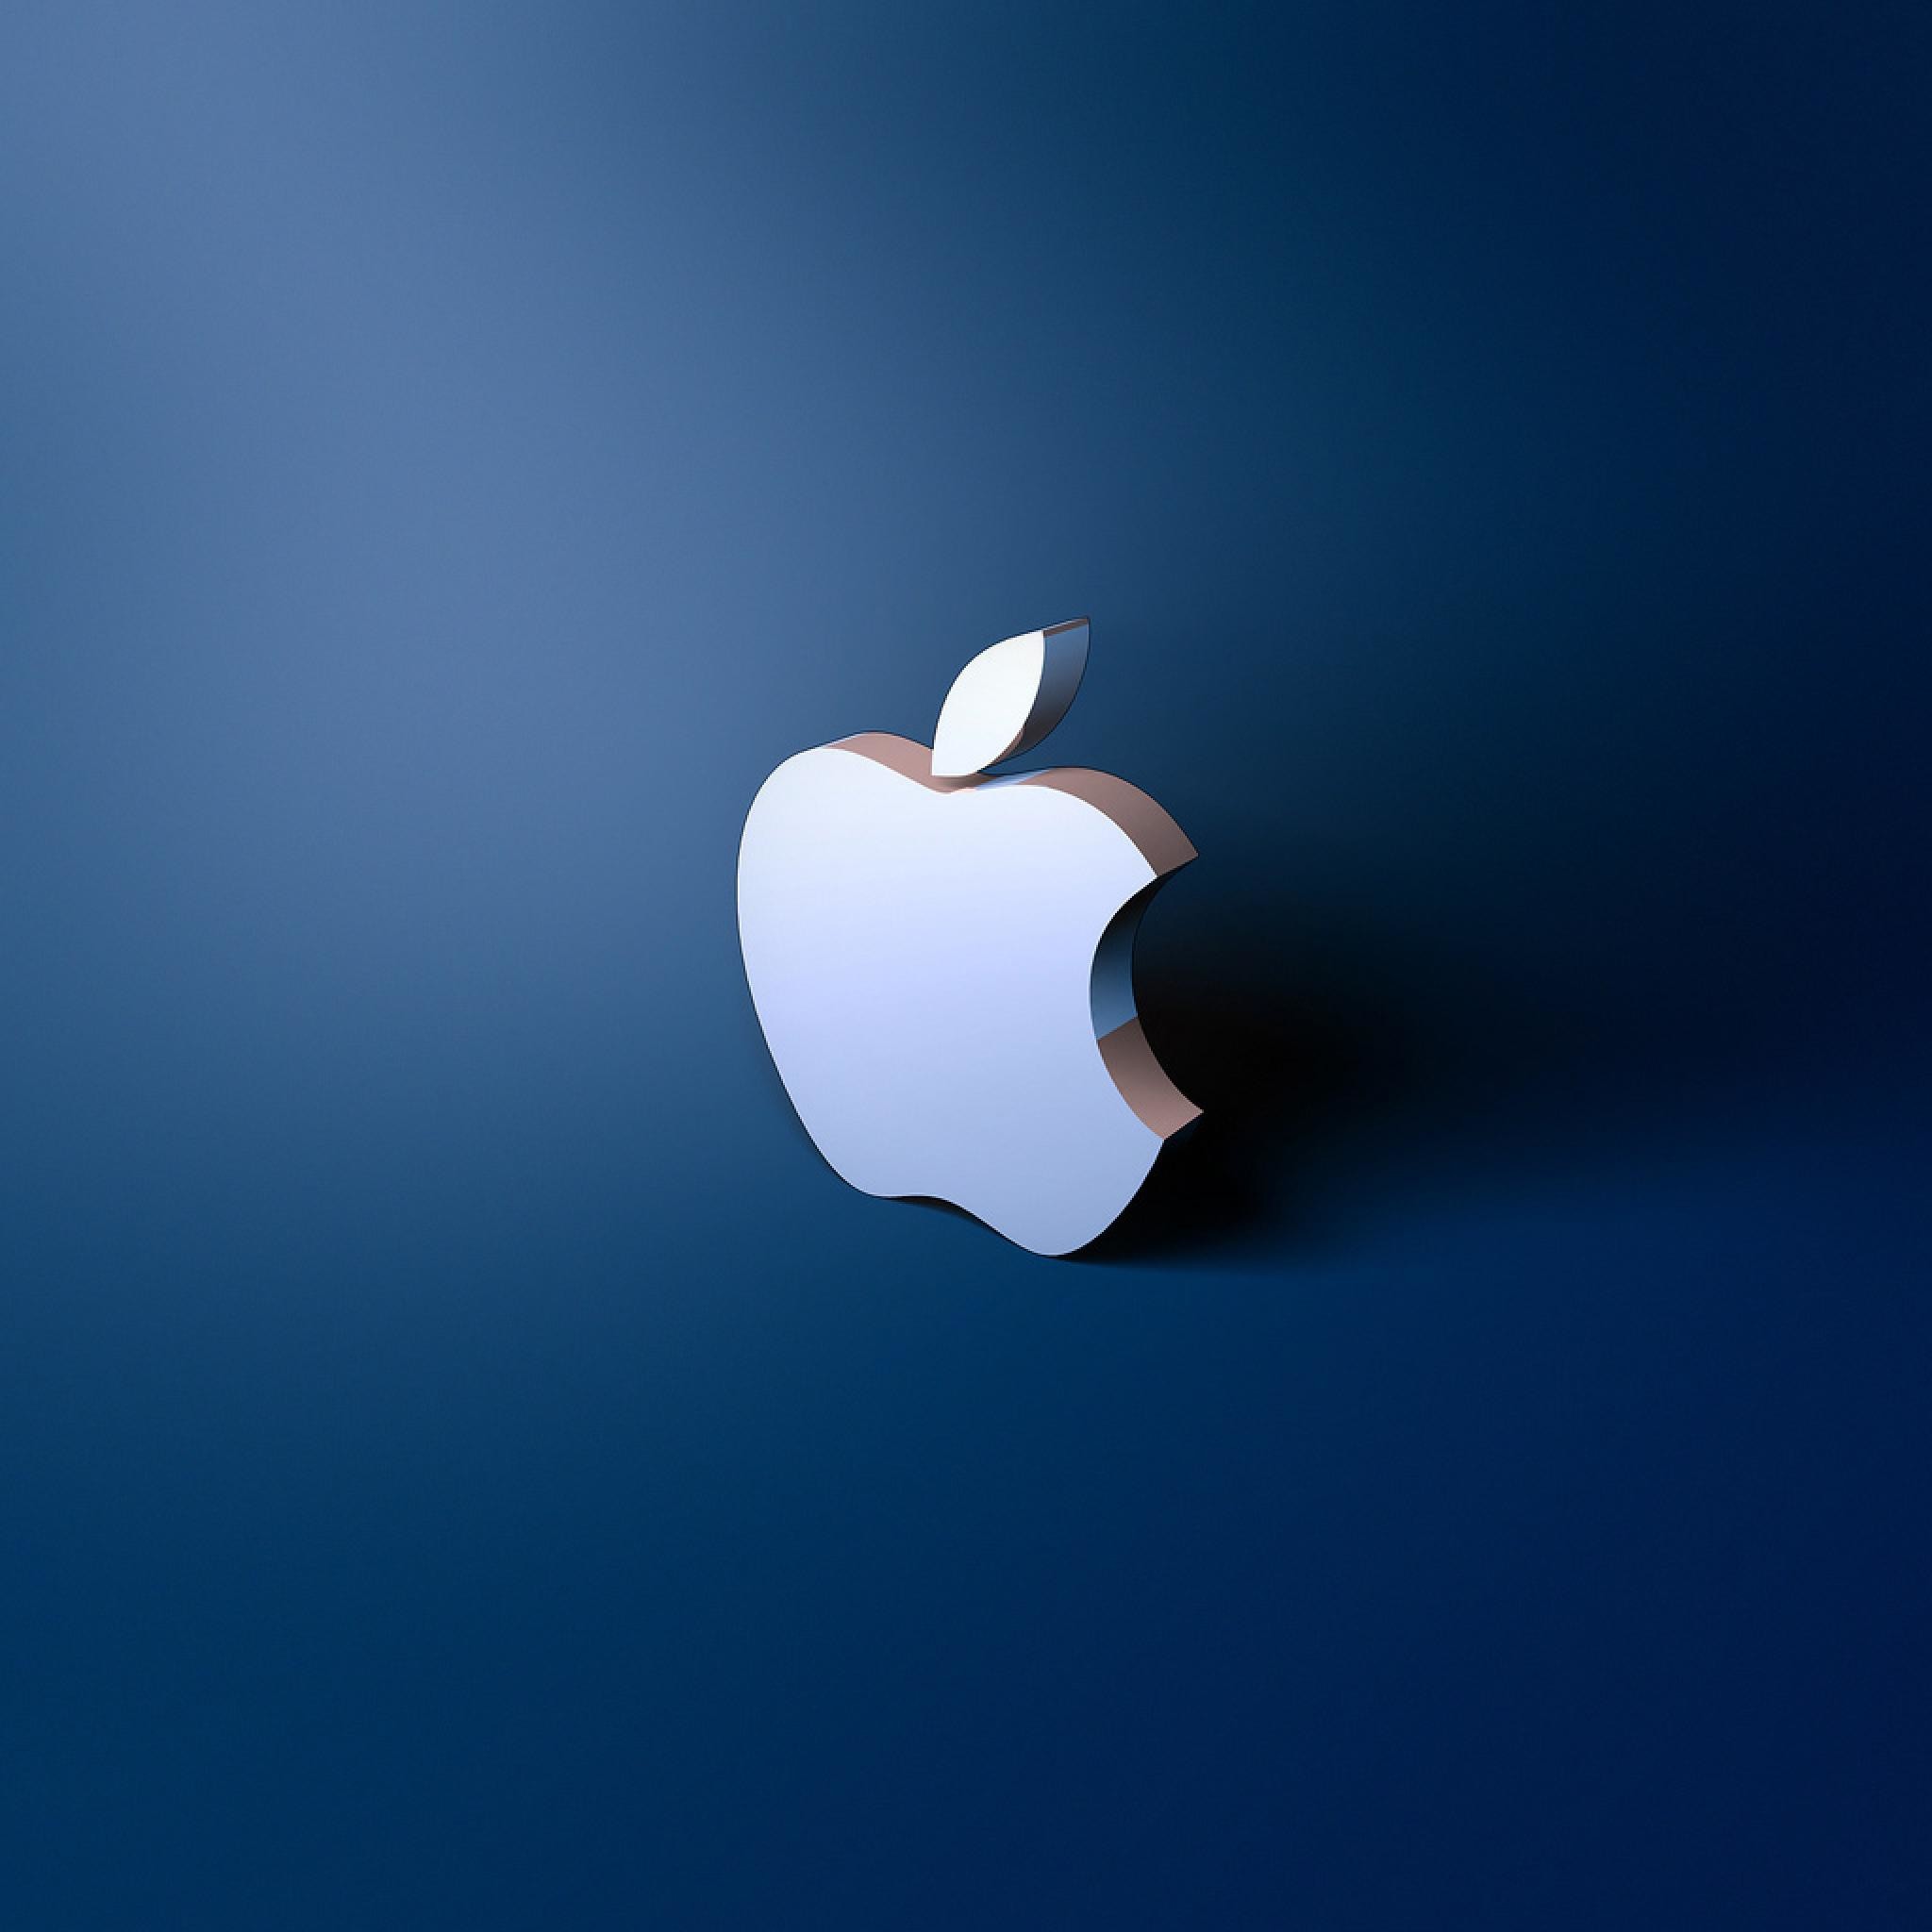 2048x2048 blue metallic and shiny apple logo ipad iphone hd wallpaper